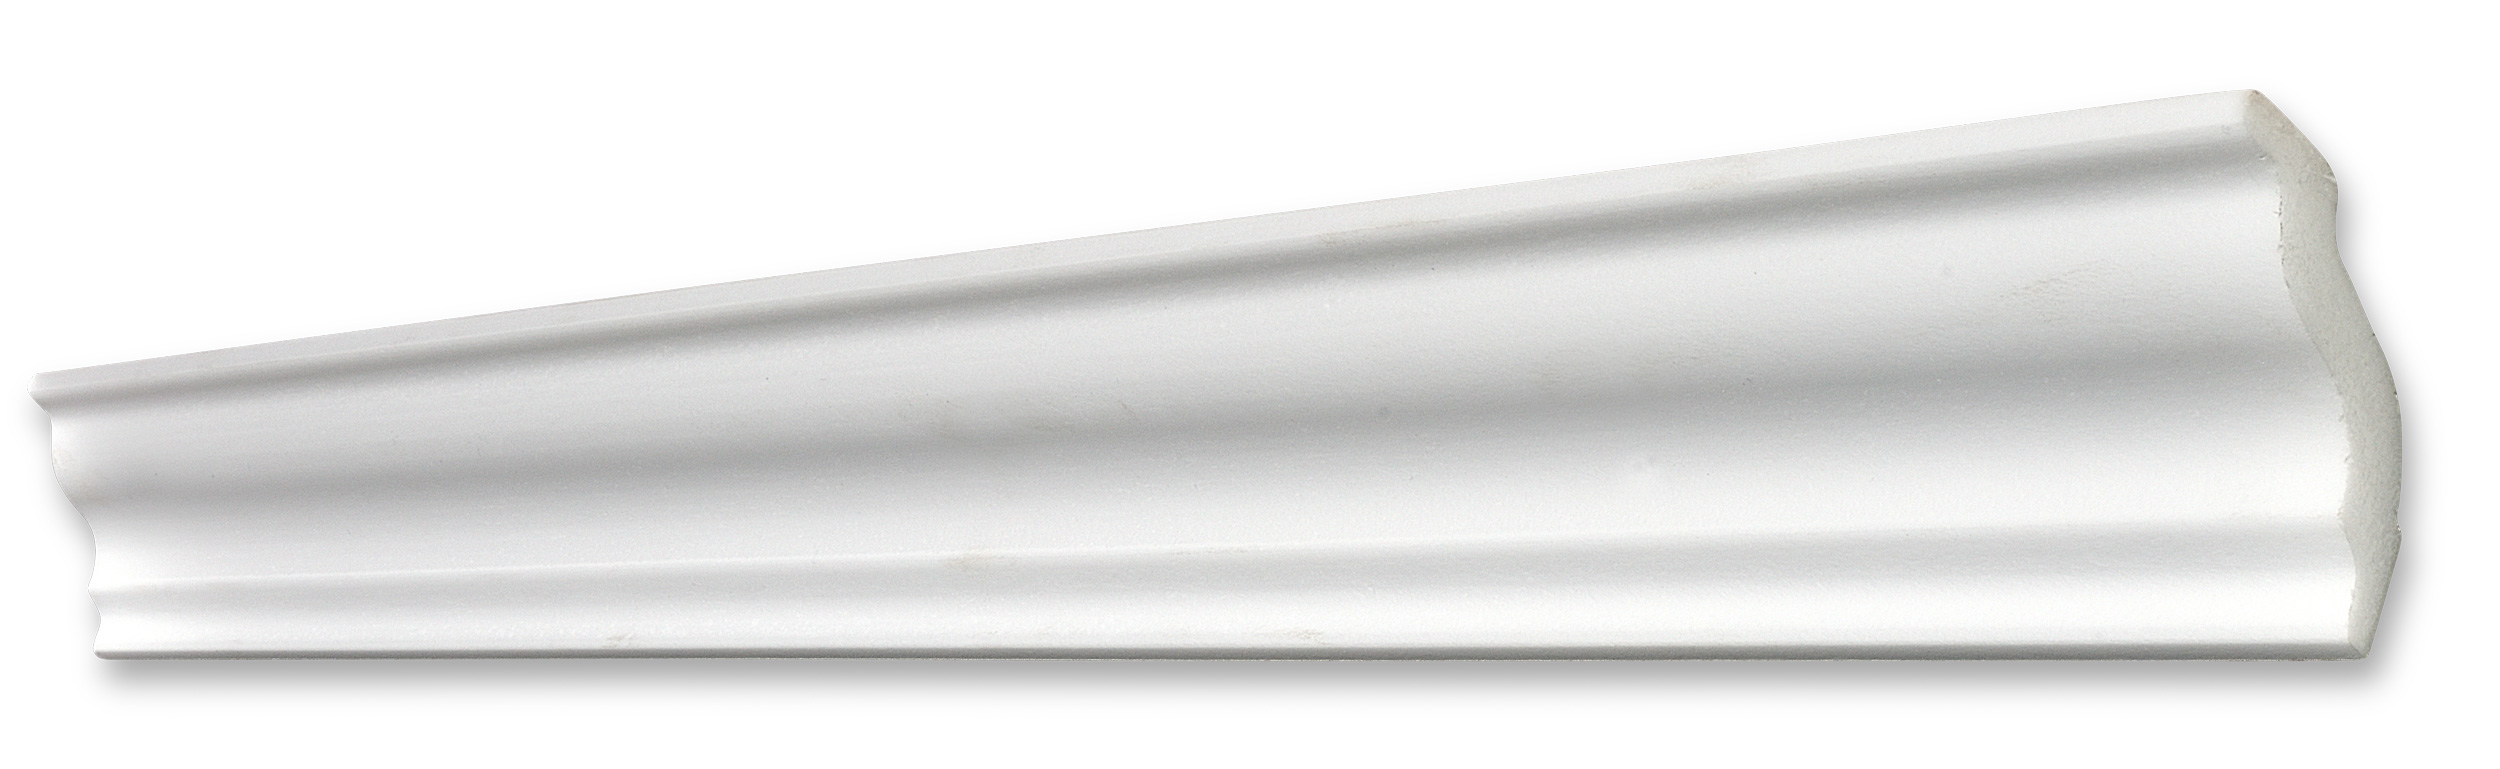 DECOSA Moulure S50 - polystyrène - blanc - 40 x 45 mm - longueur 2 m